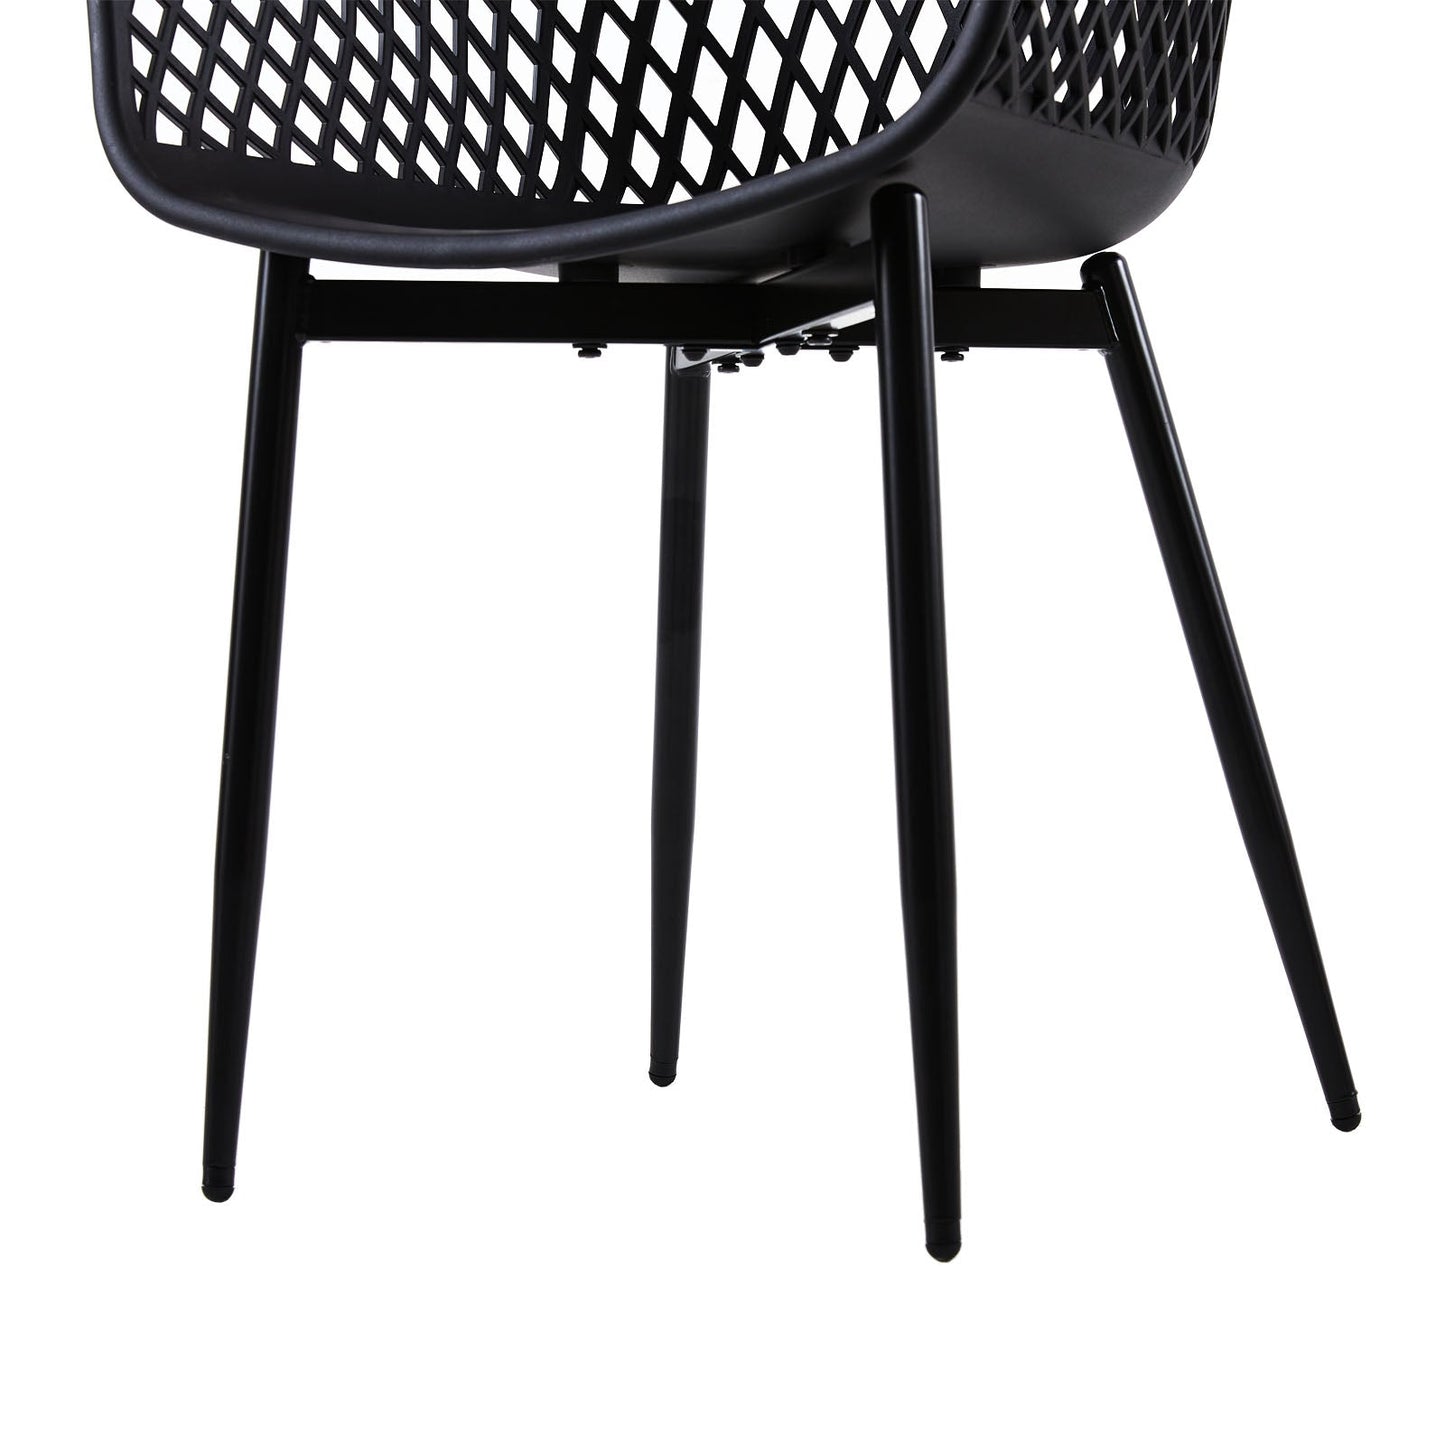 ROME Hollow Arm Chair (Set of 6) - Black/White